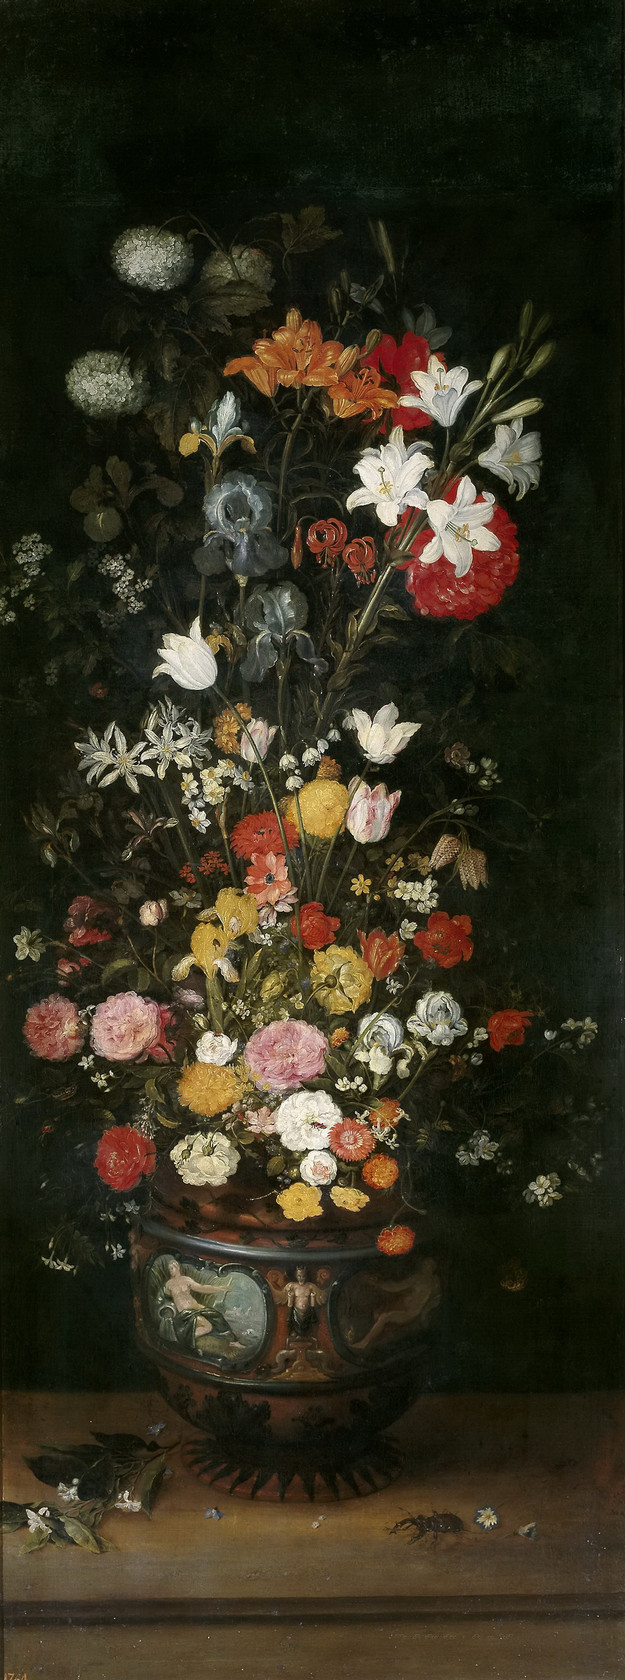 Картина №1 Натюрморт с цветами - Музей Прадо